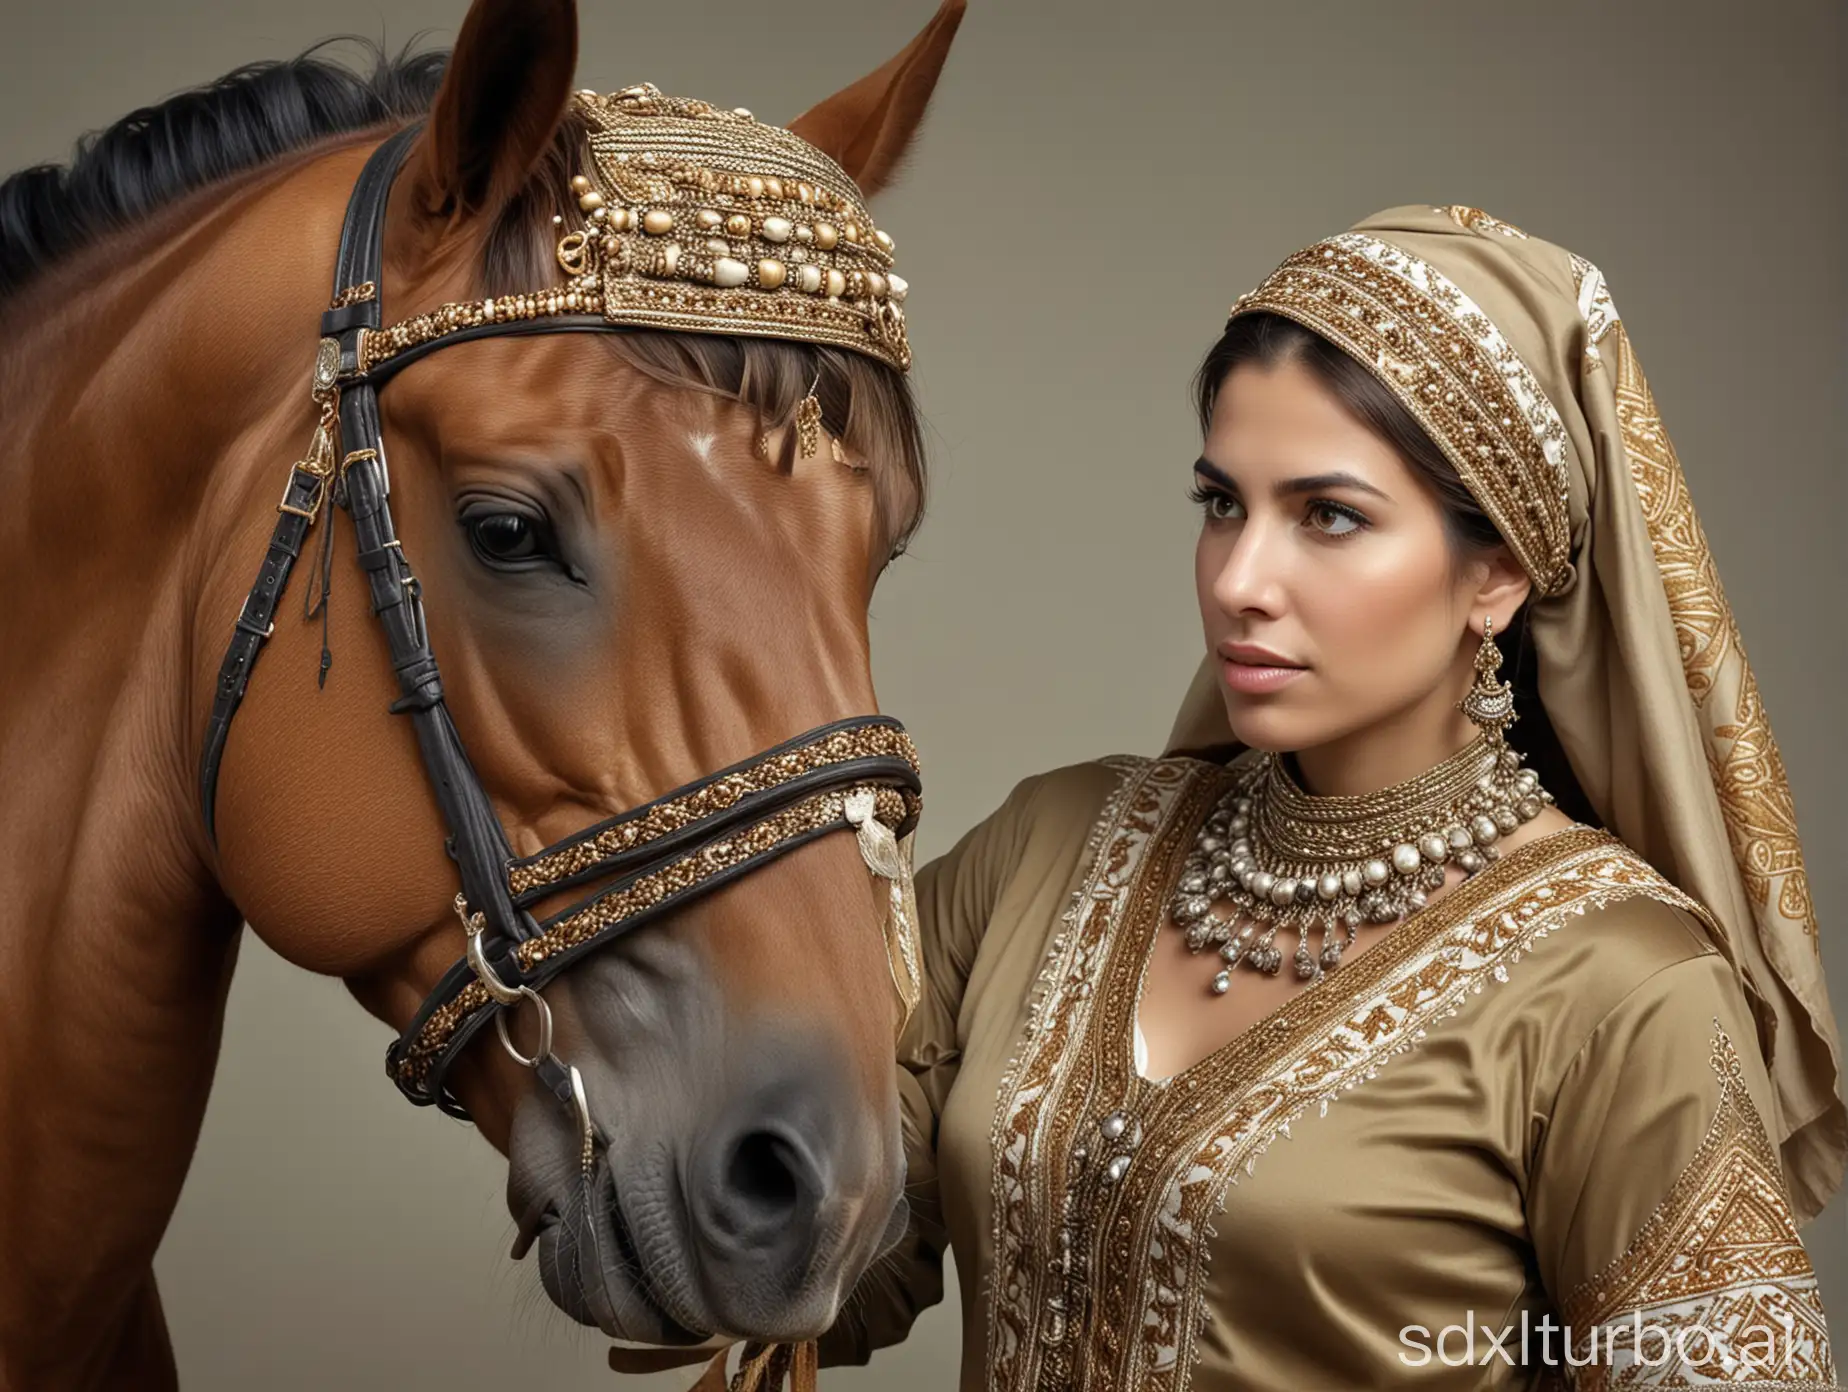 Stunning-Portrait-of-Greek-Woman-Embracing-Horse-in-Javanese-Kemben-and-Khaki-Attire